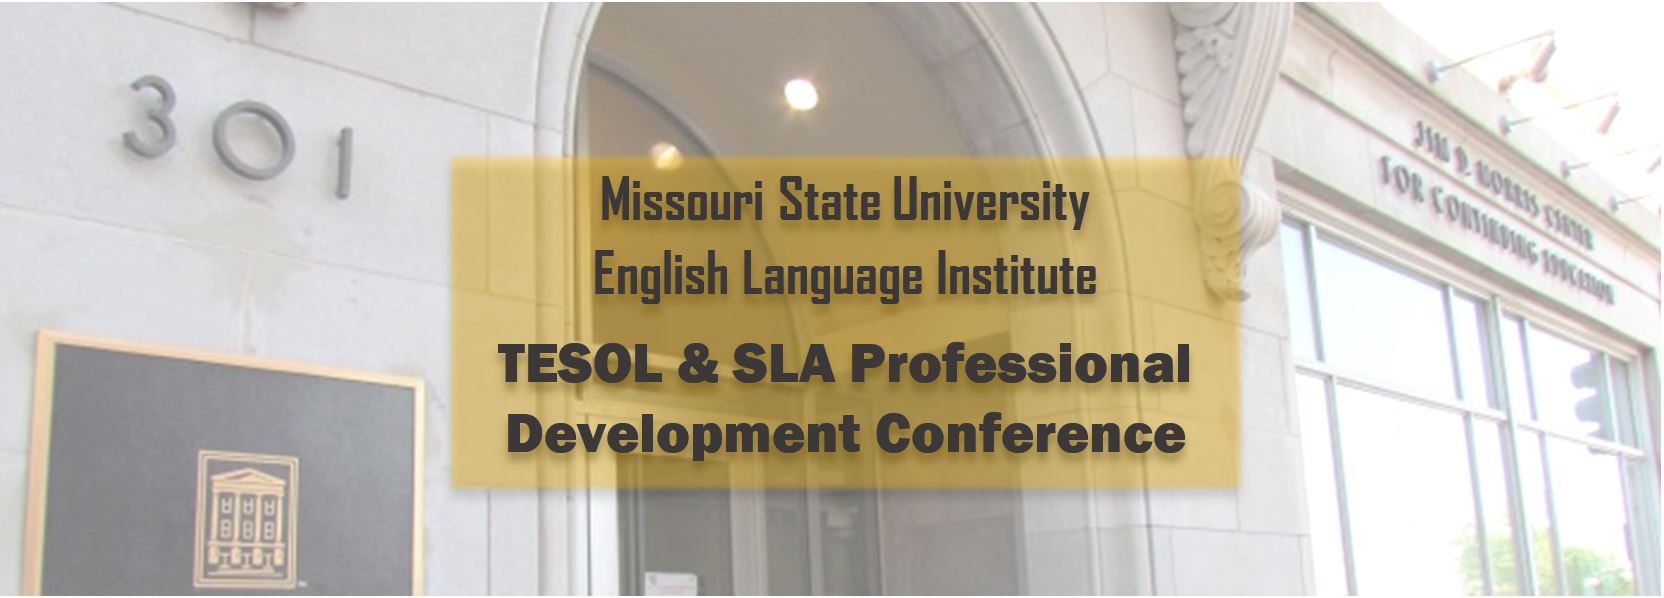 TESOL & SLA Professional Development Conference